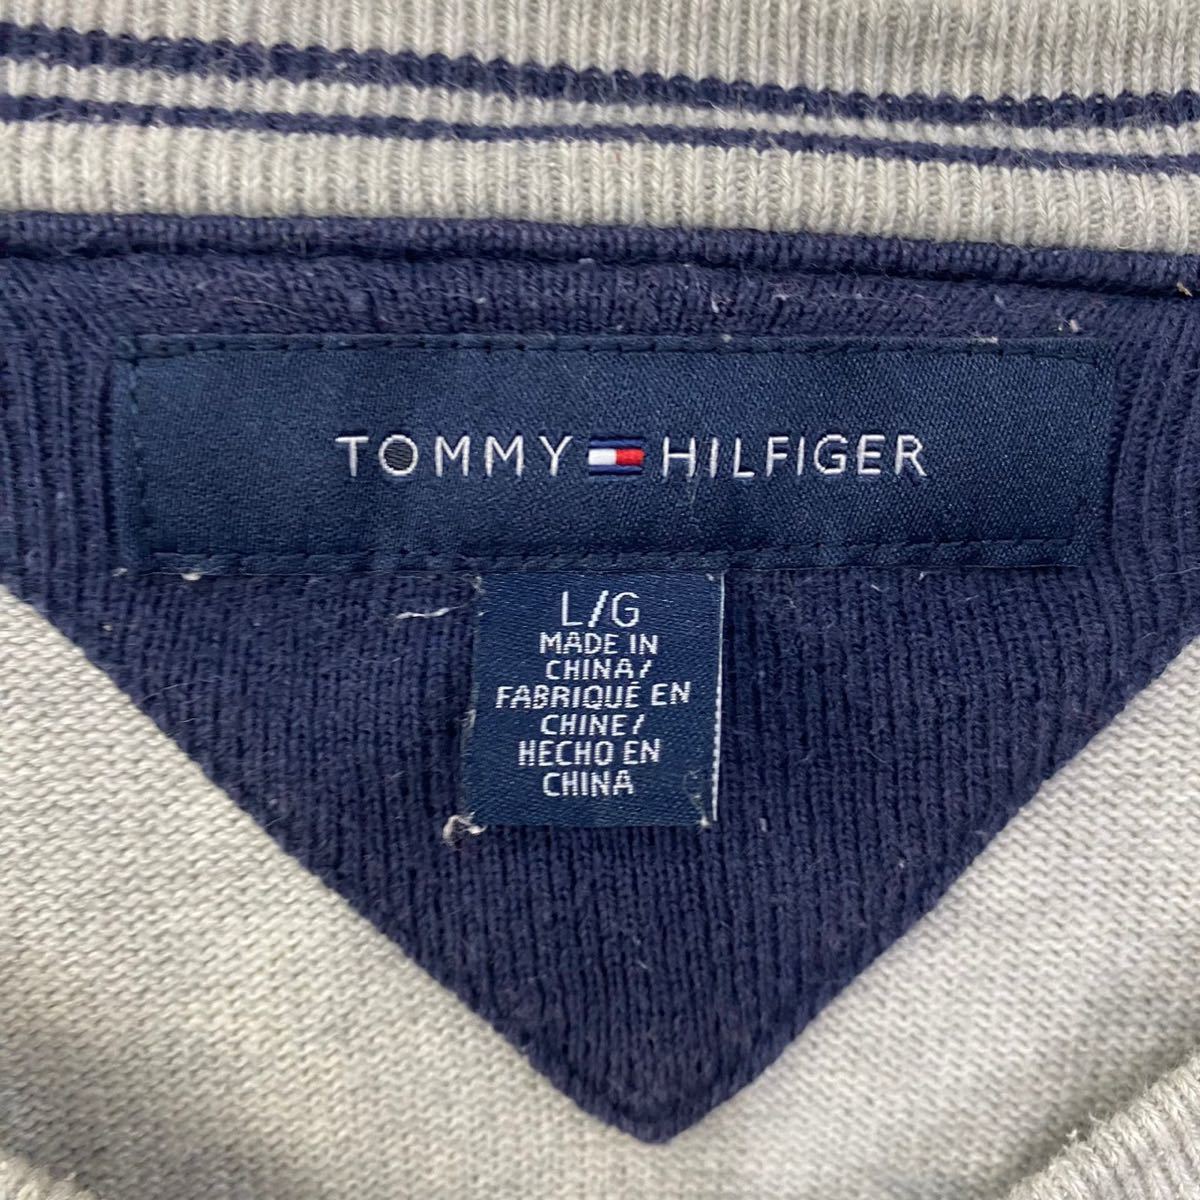 TOMMY HILFIGER トミーヒルフィガー スウェット トレーナー サイズL グレー 灰色 メンズ トップス 最落なし （V7）_画像5